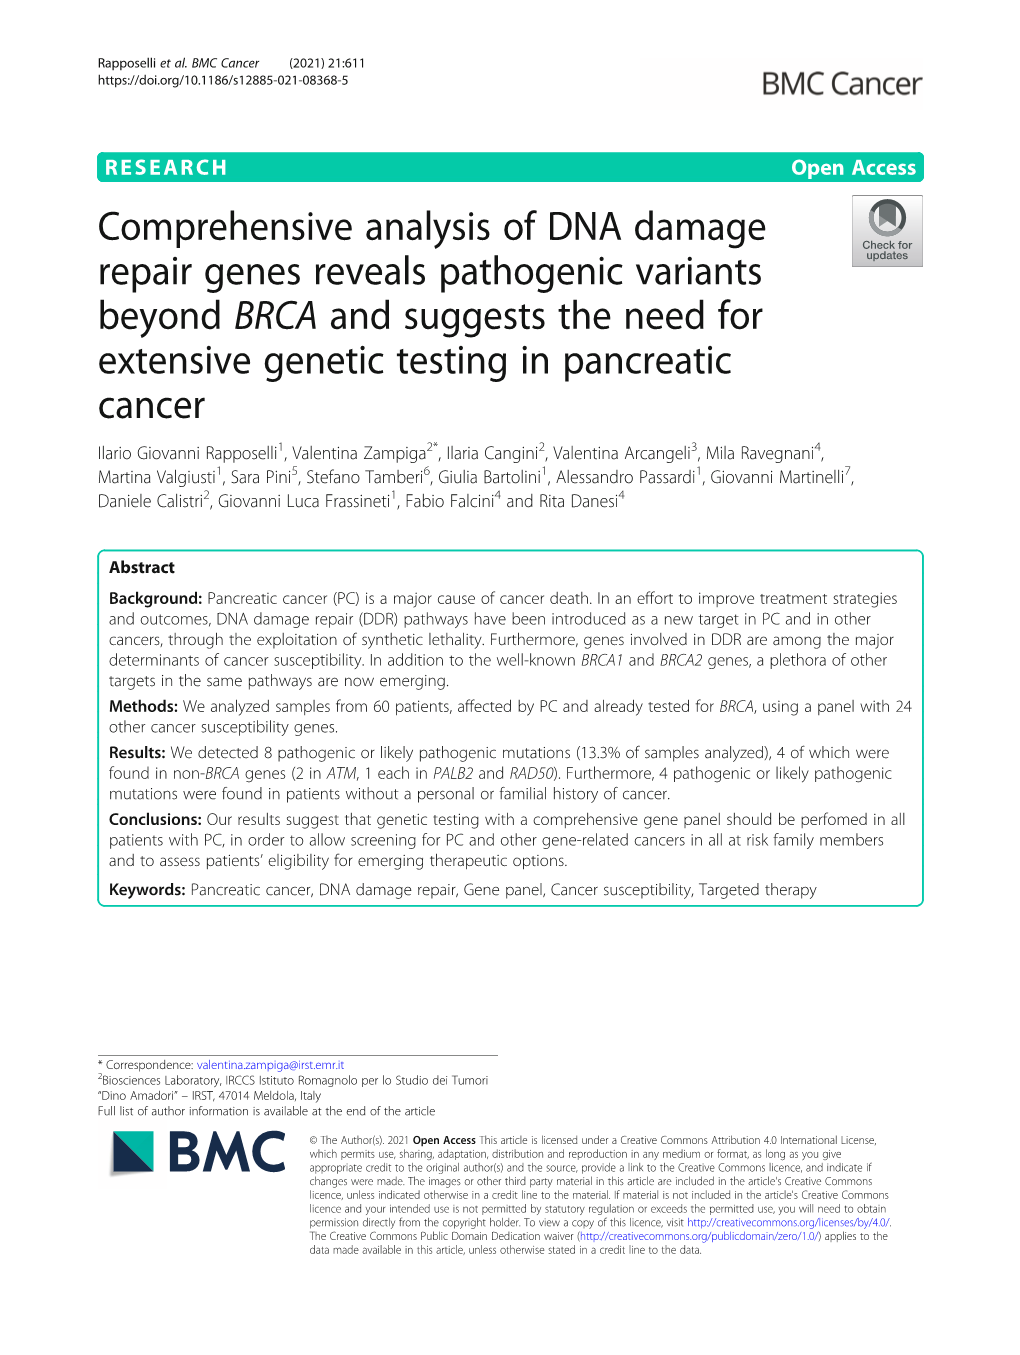 Comprehensive Analysis of DNA Damage Repair Genes Reveals